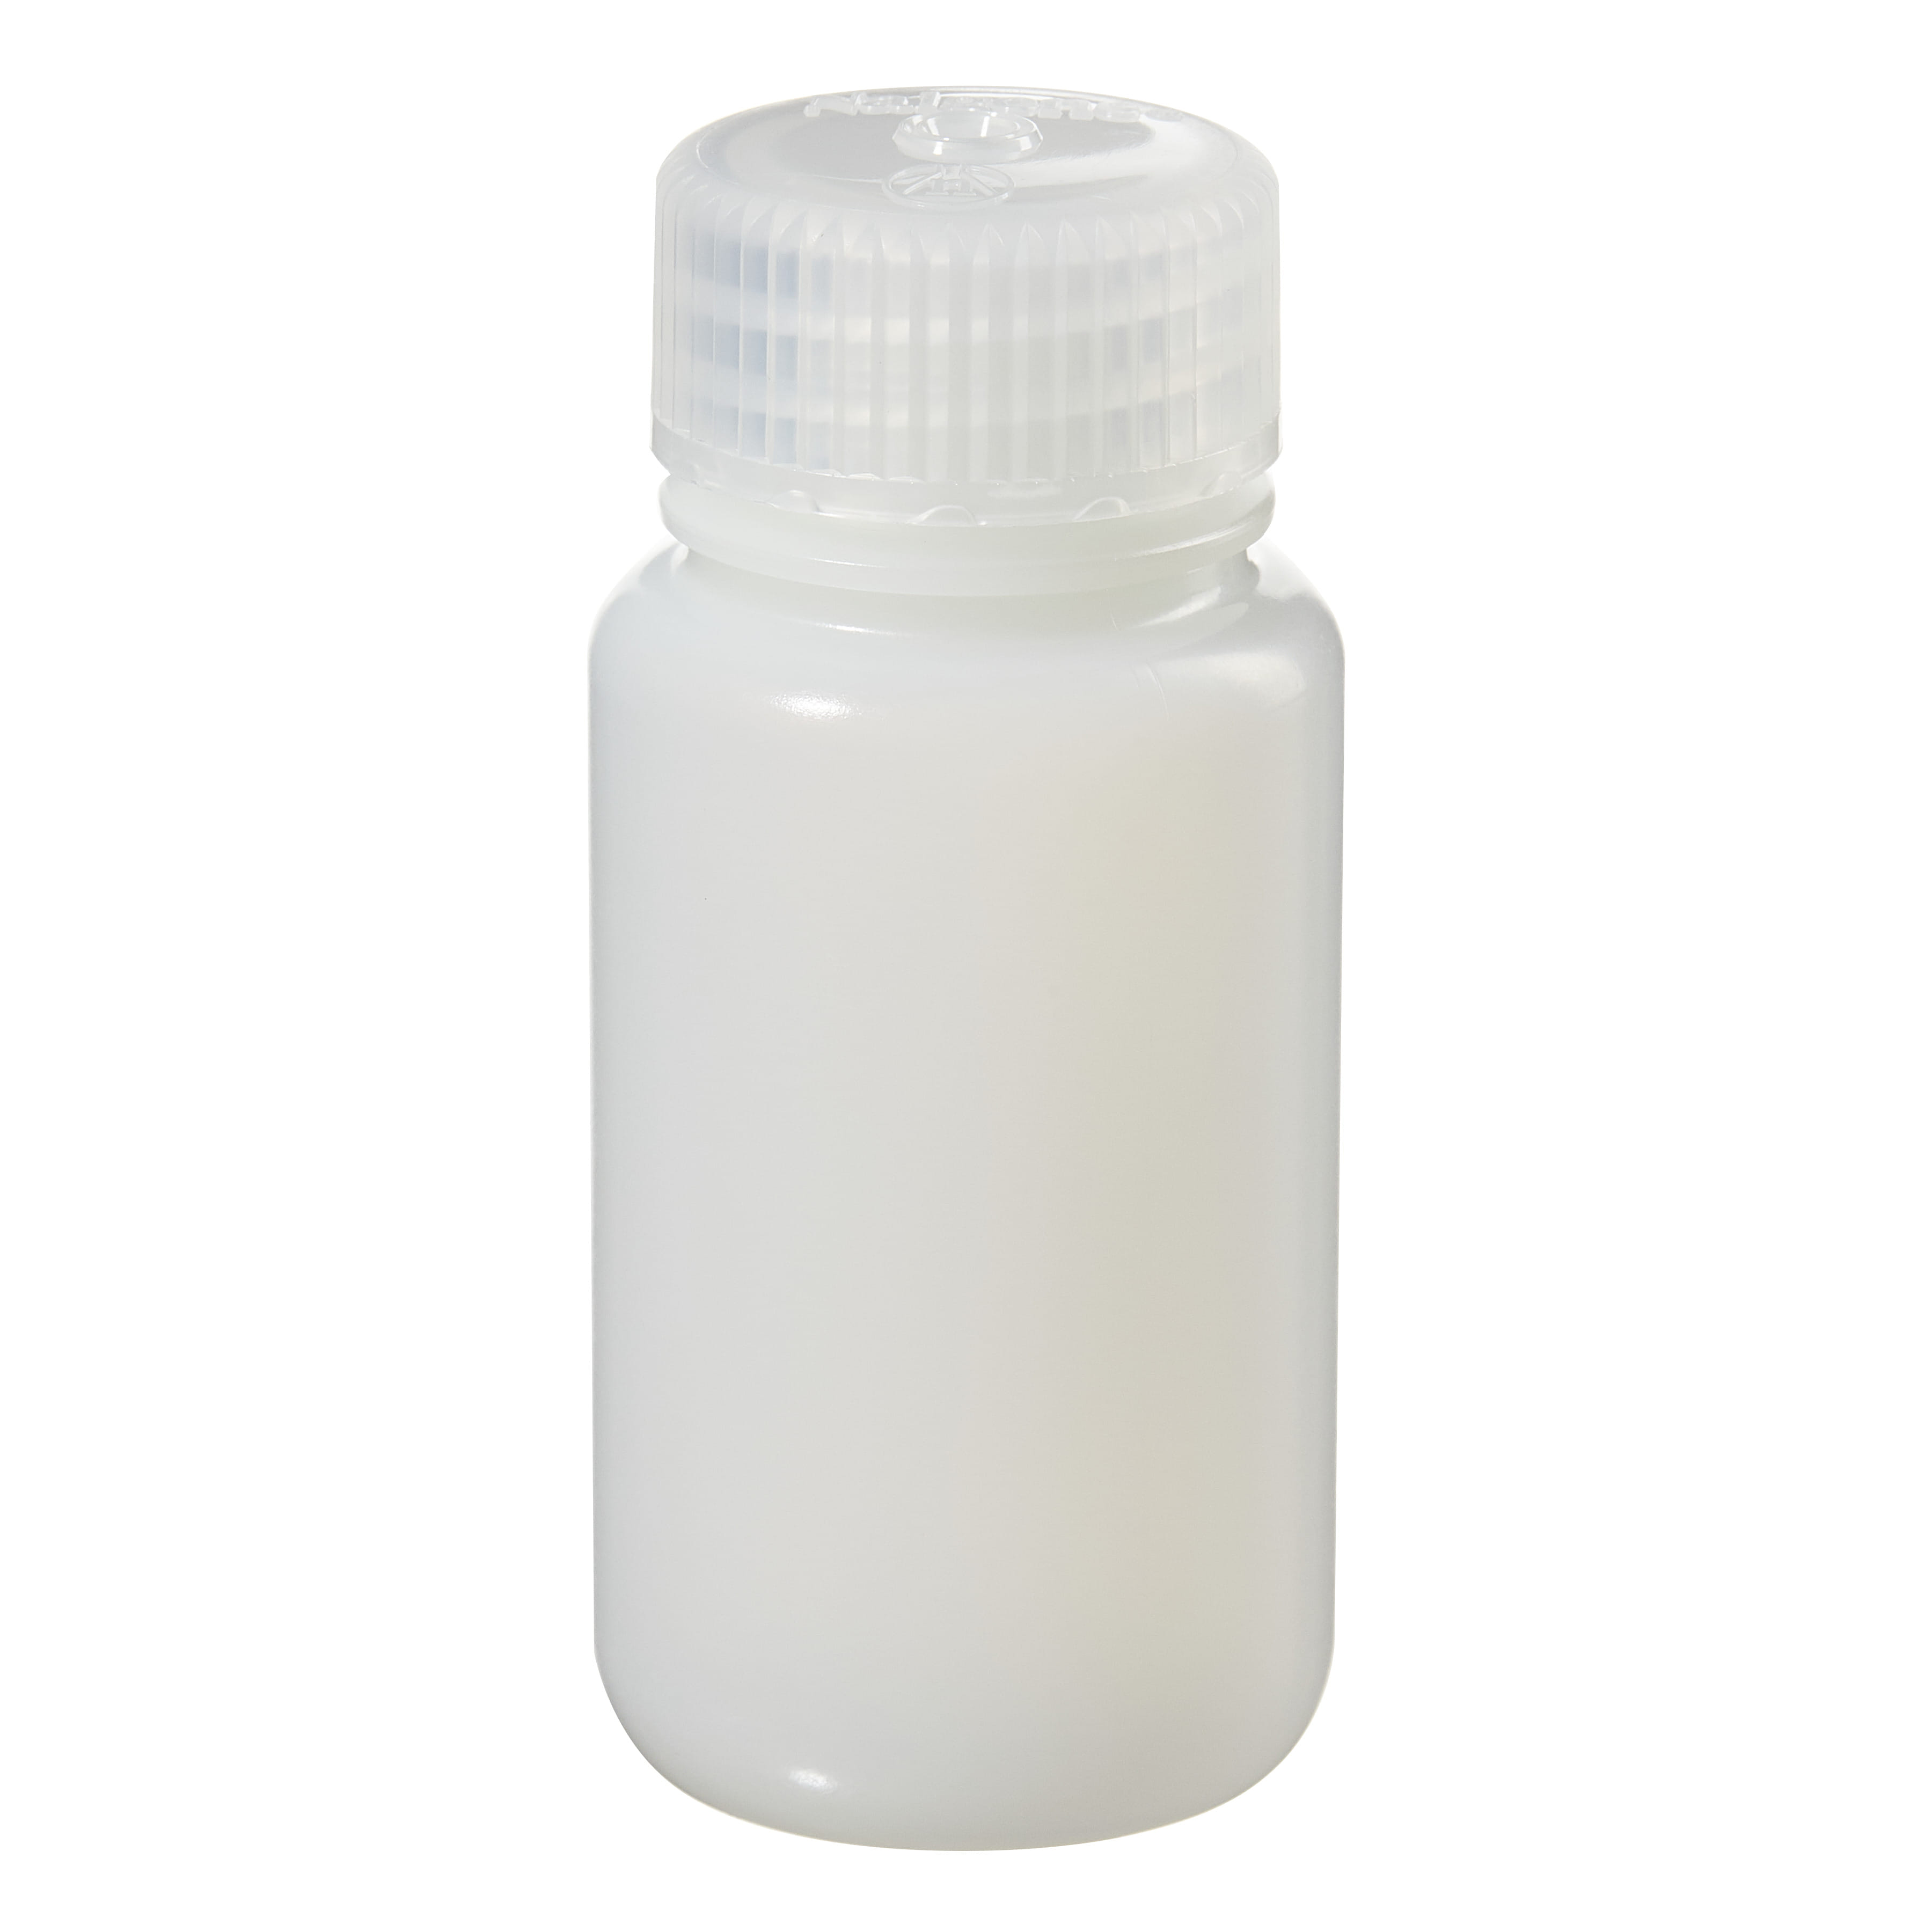 [Thermo Nalgene] 2103-0002 / 60mL Nalgene Wide-Mouth LDPE Bottle